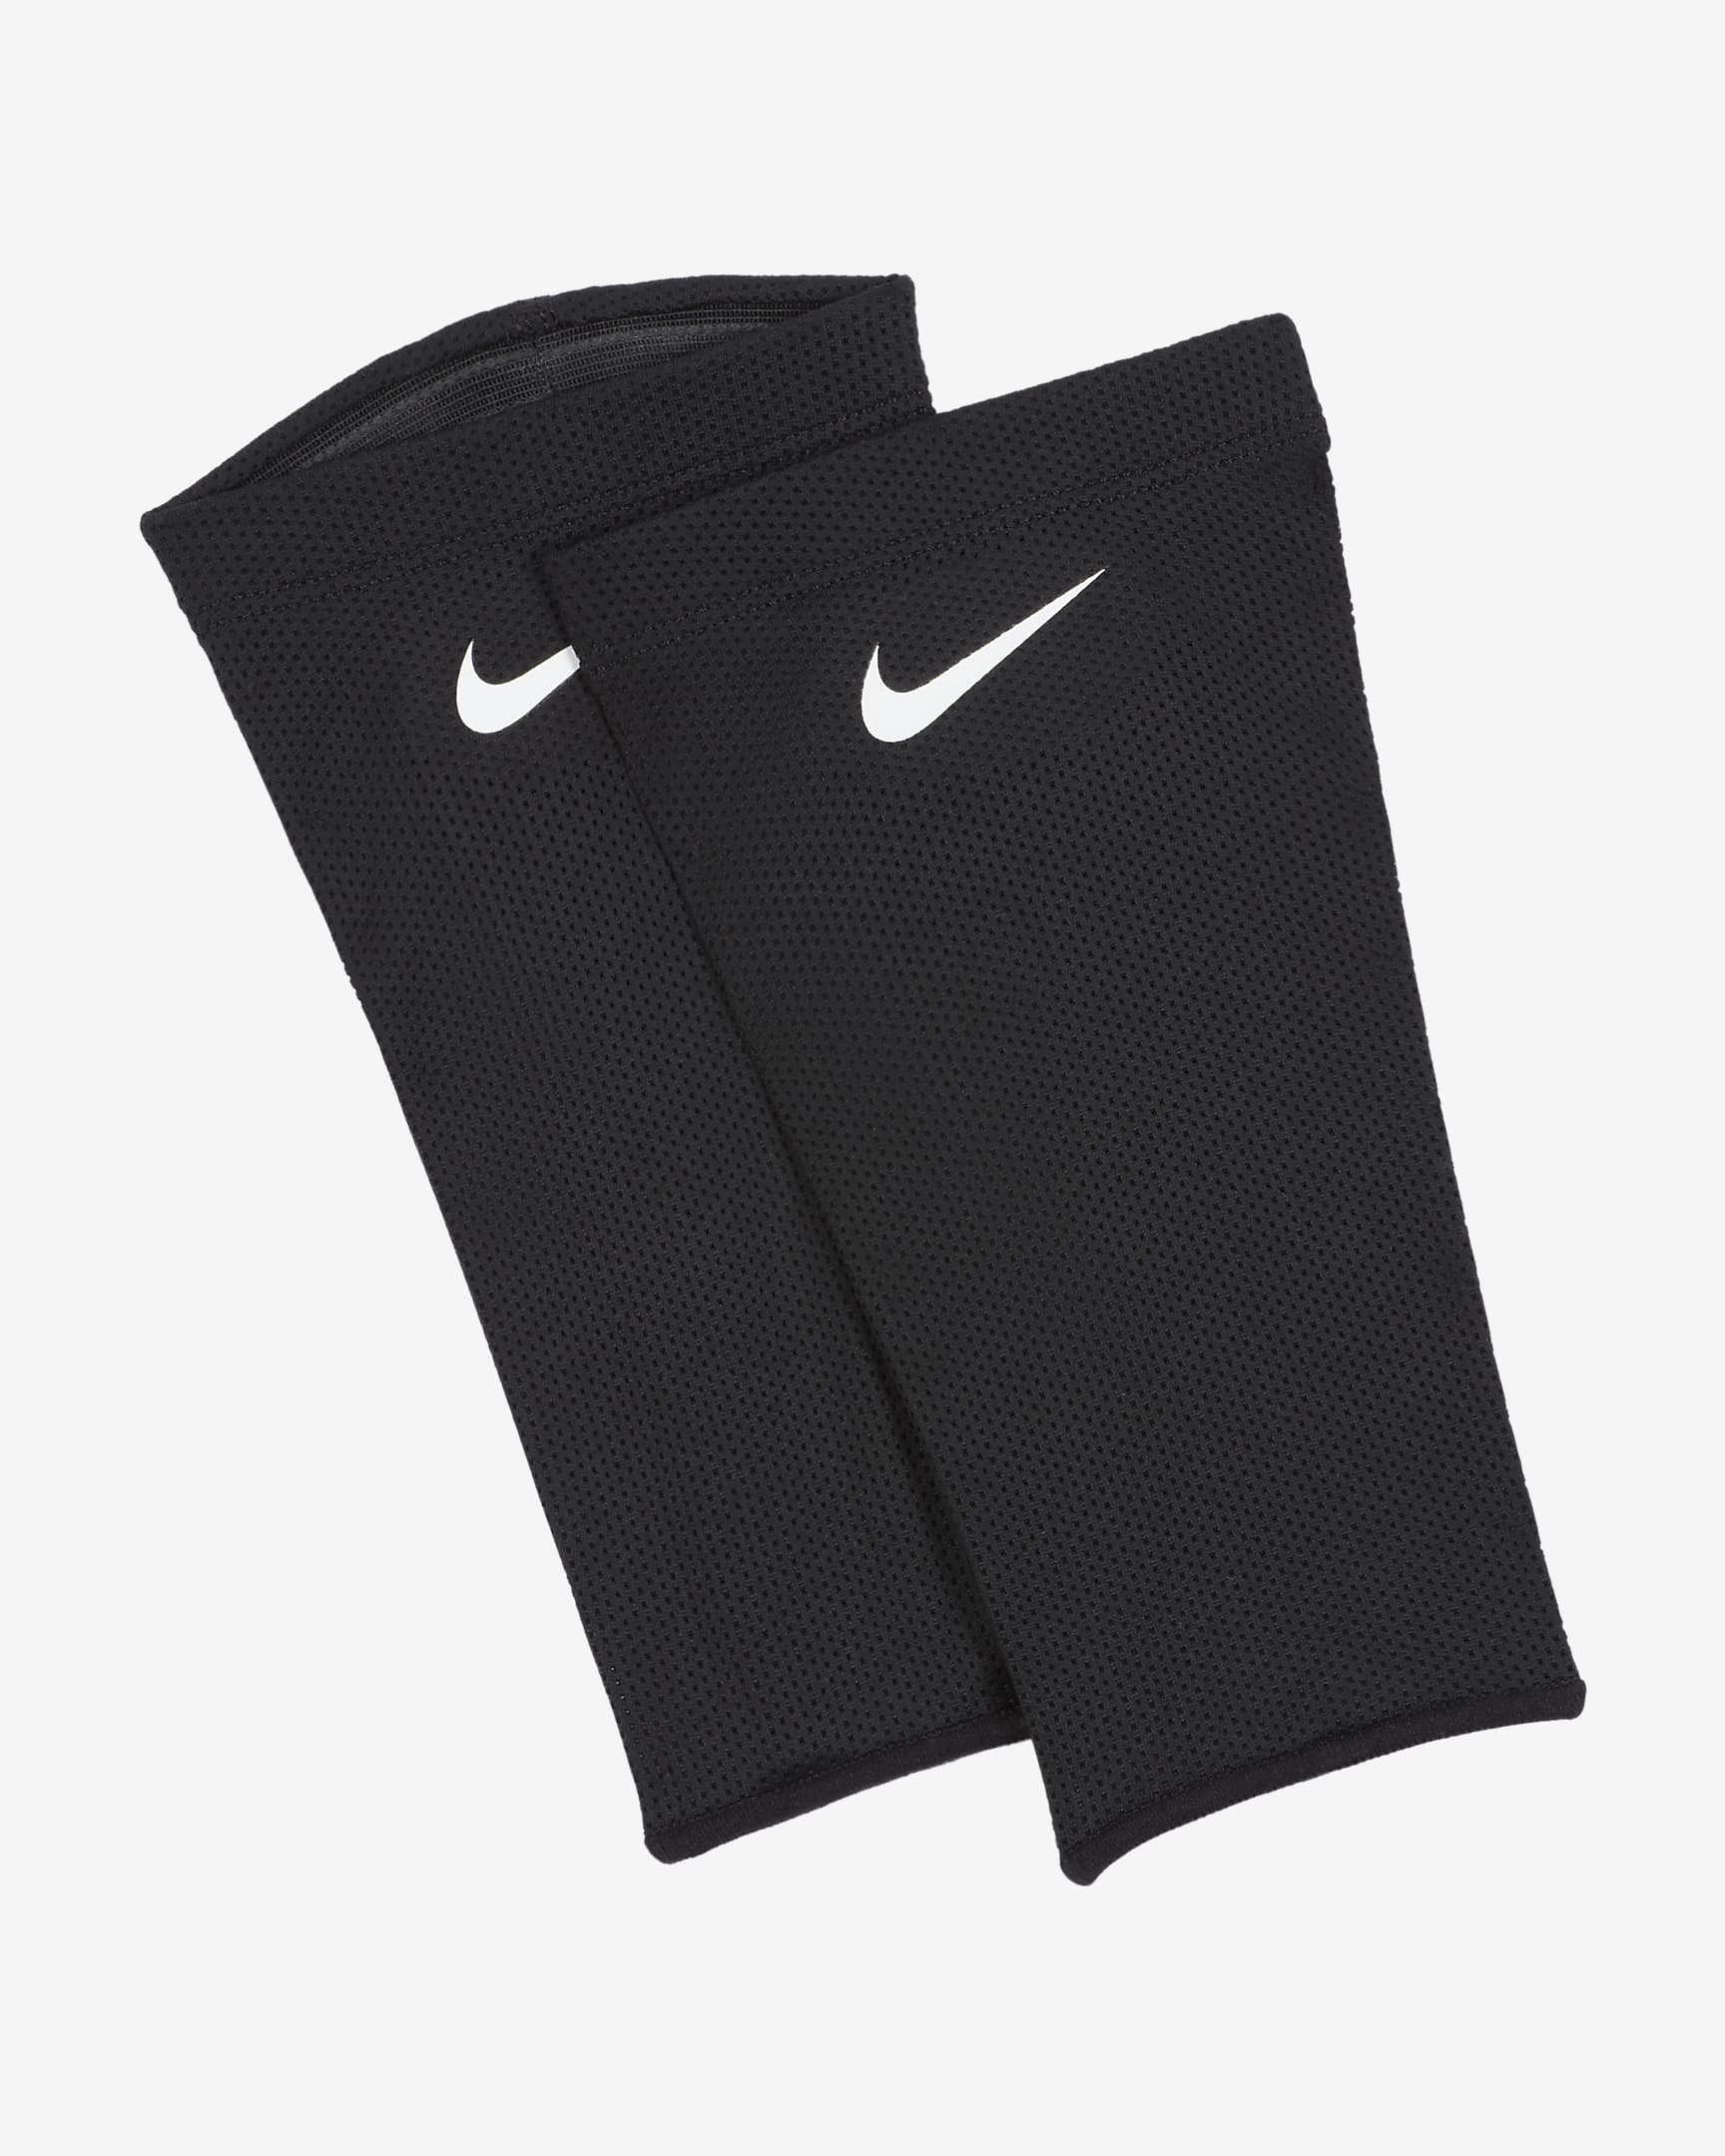 Nike Guard Lock Elite Football Sleeves - Black/White/White